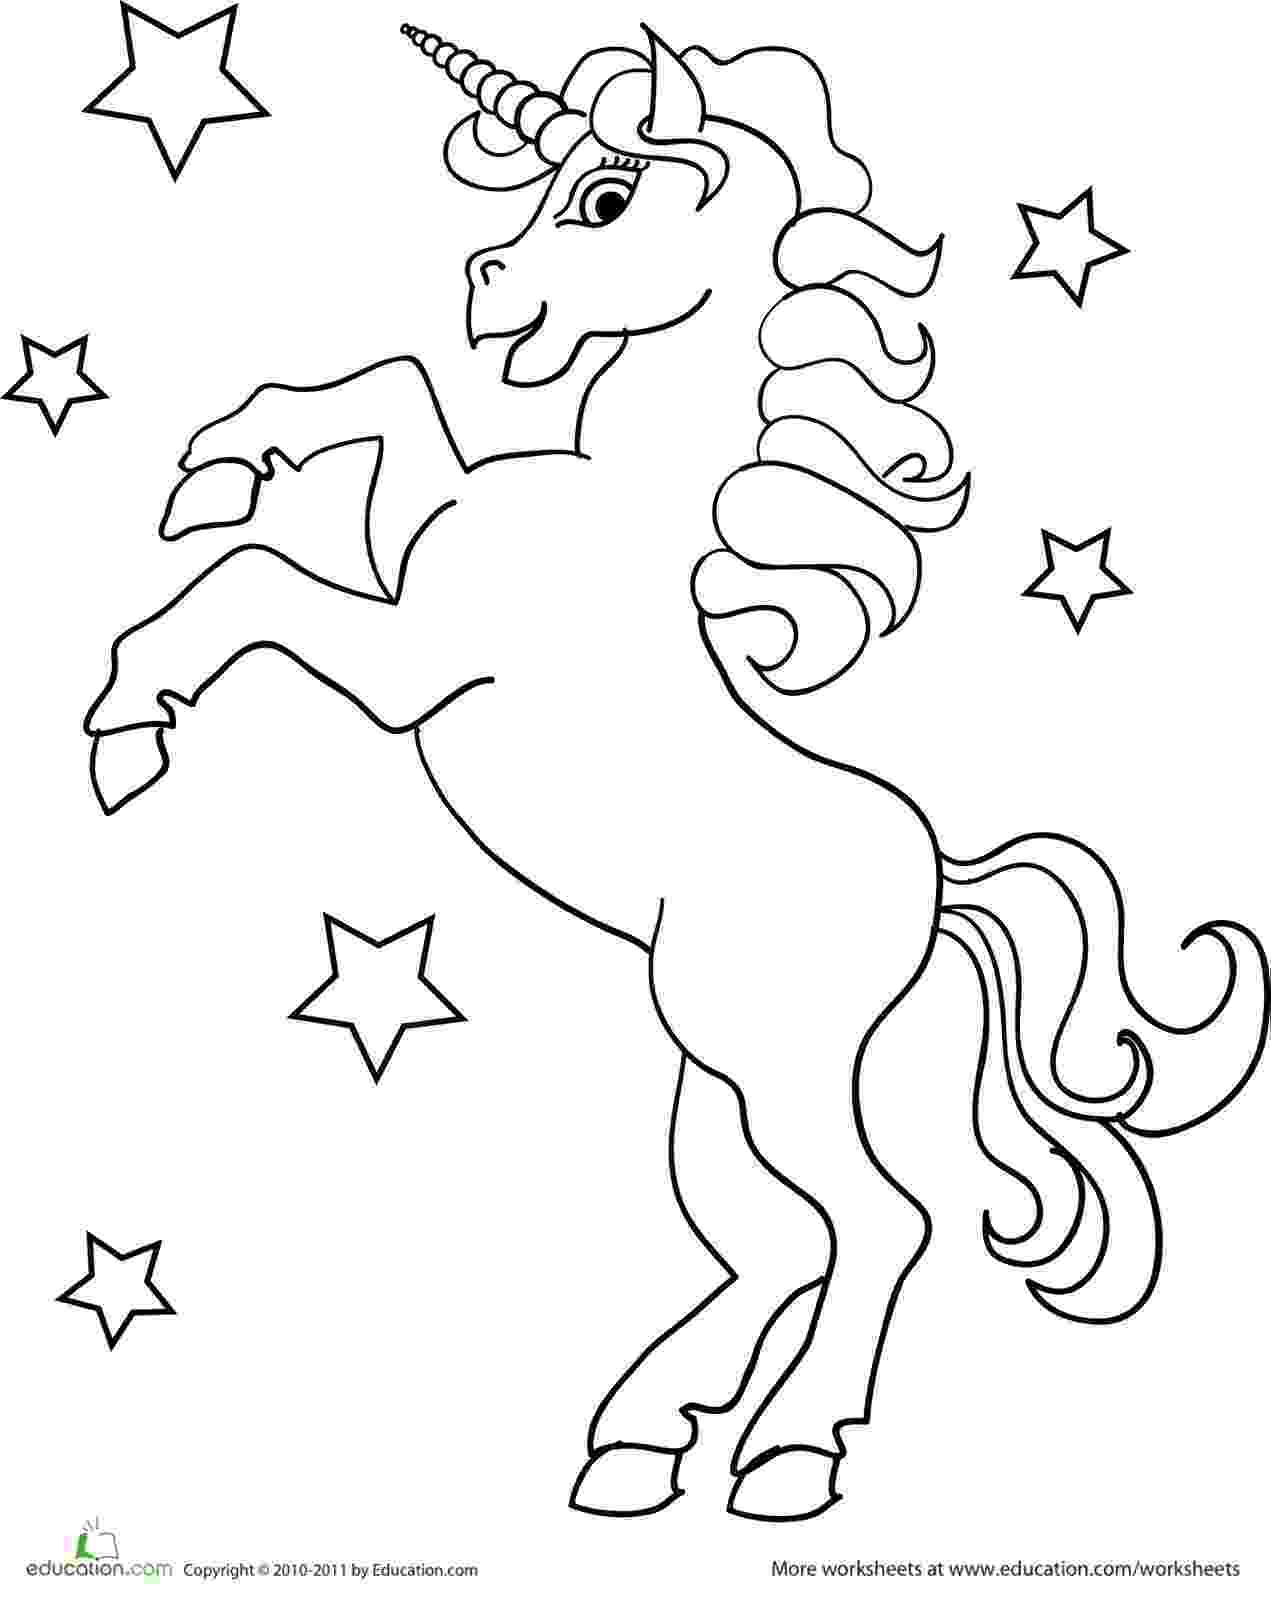 unicorns coloring pages free printable unicorn coloring pages for kids coloring unicorns pages 1 1